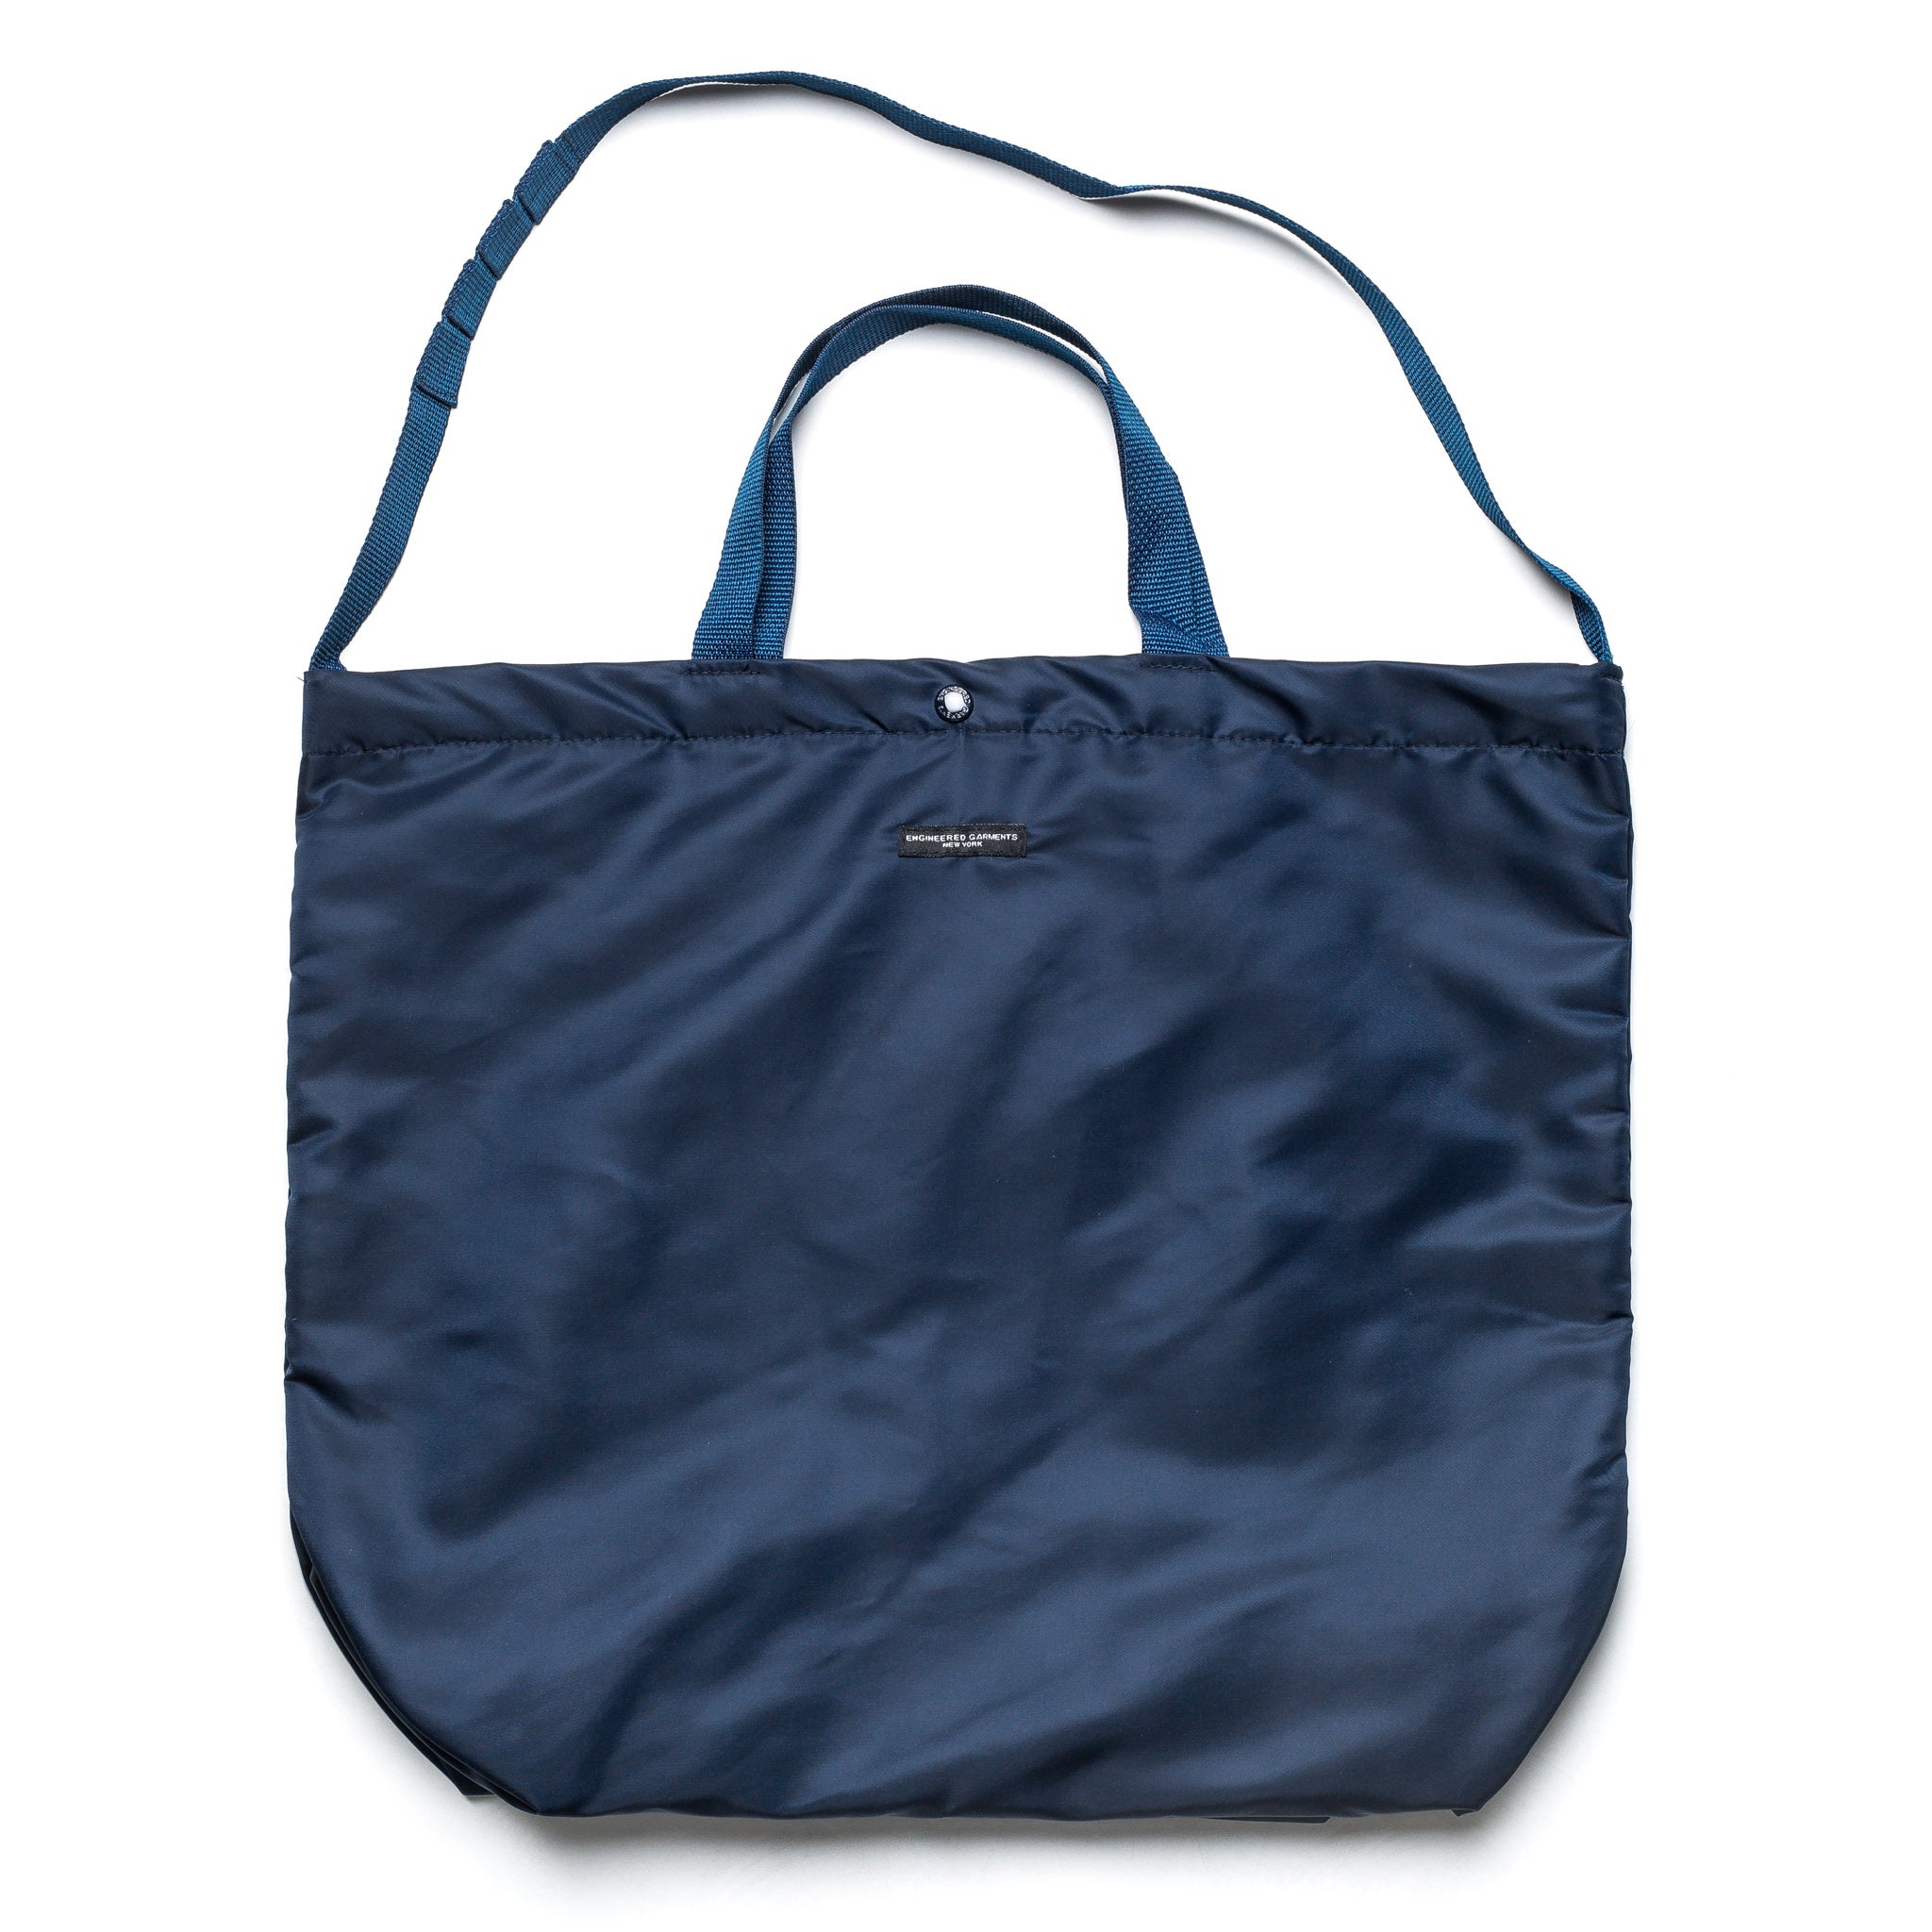 Aeron Tuna large tote bag